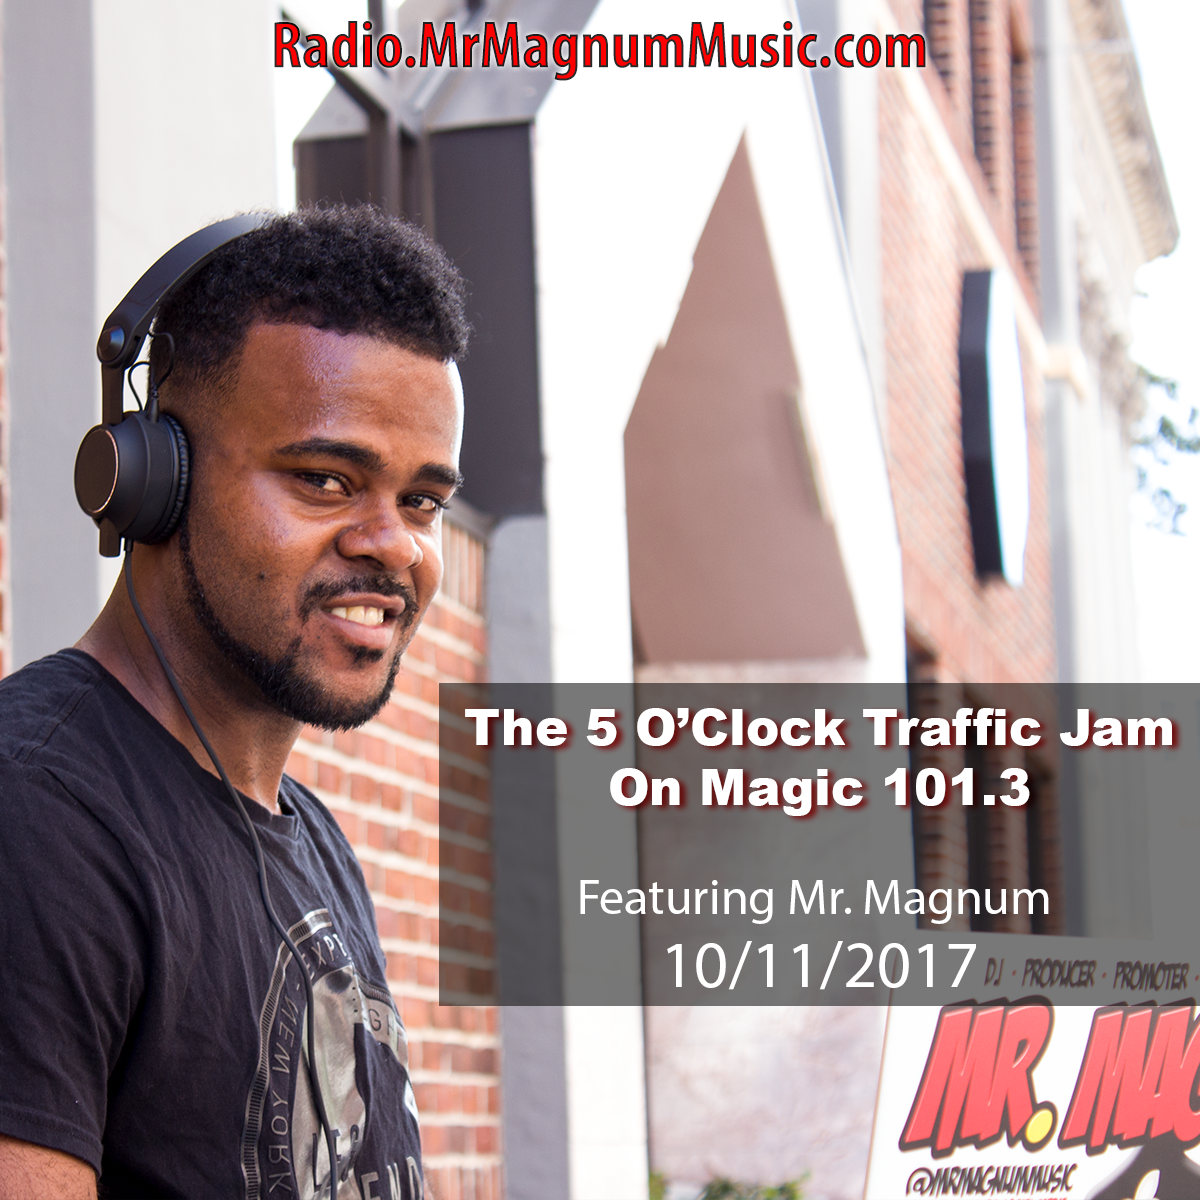 The 5 O'Clock Traffic Jam 20171011 featuring Gainesville's #1 DJ, Mr. Magnum on Magic 101.3